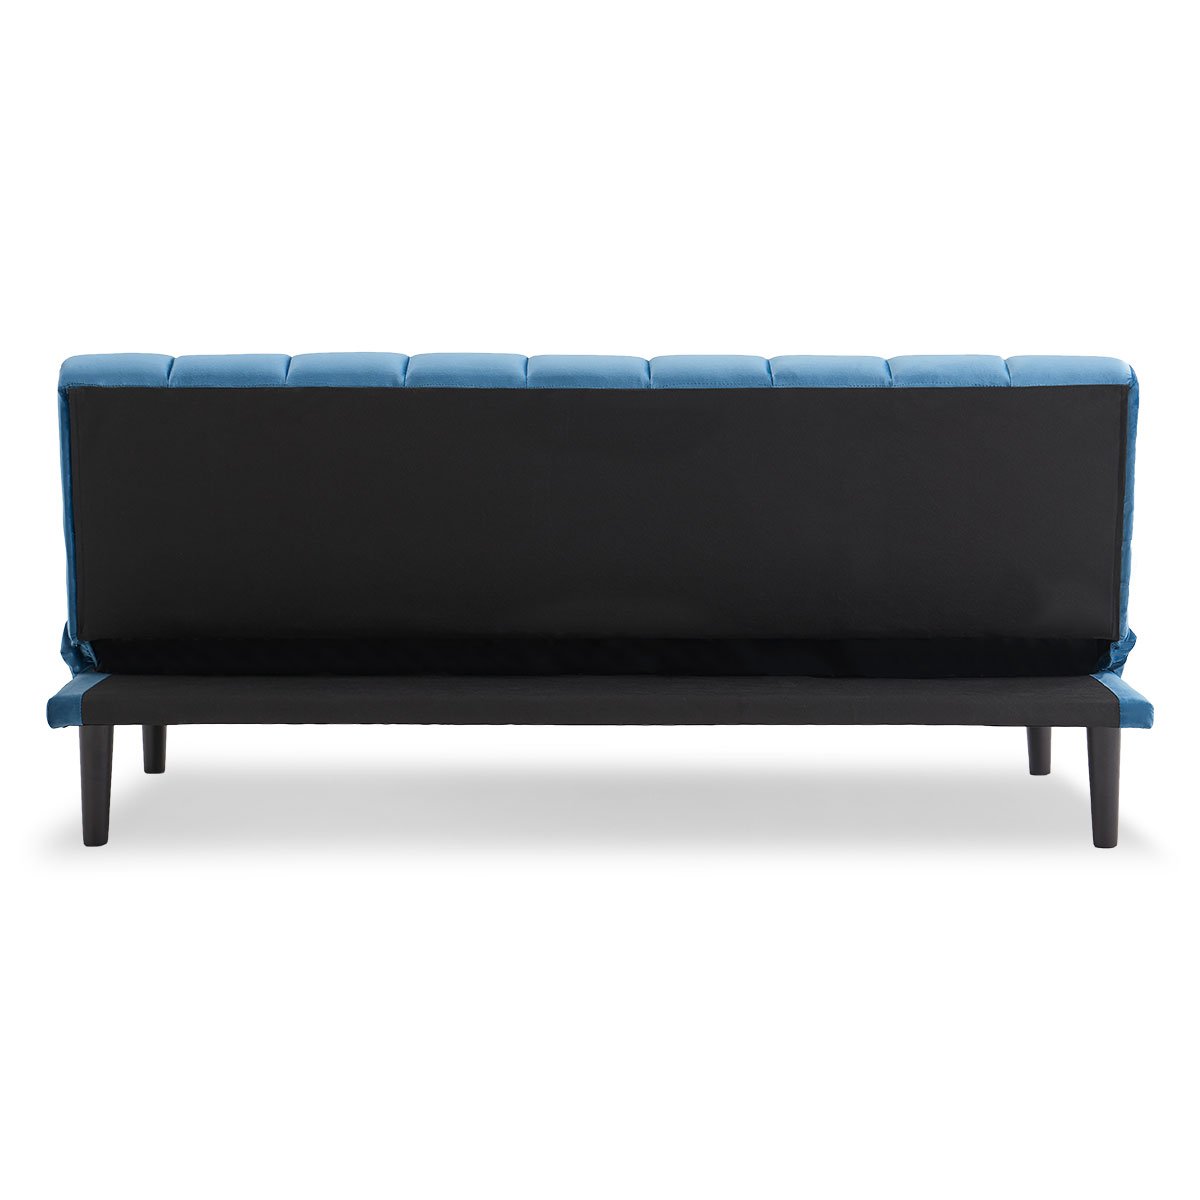 indoor furniture Suede Fabric Sofa Bed Furniture Lounge Seat Blue